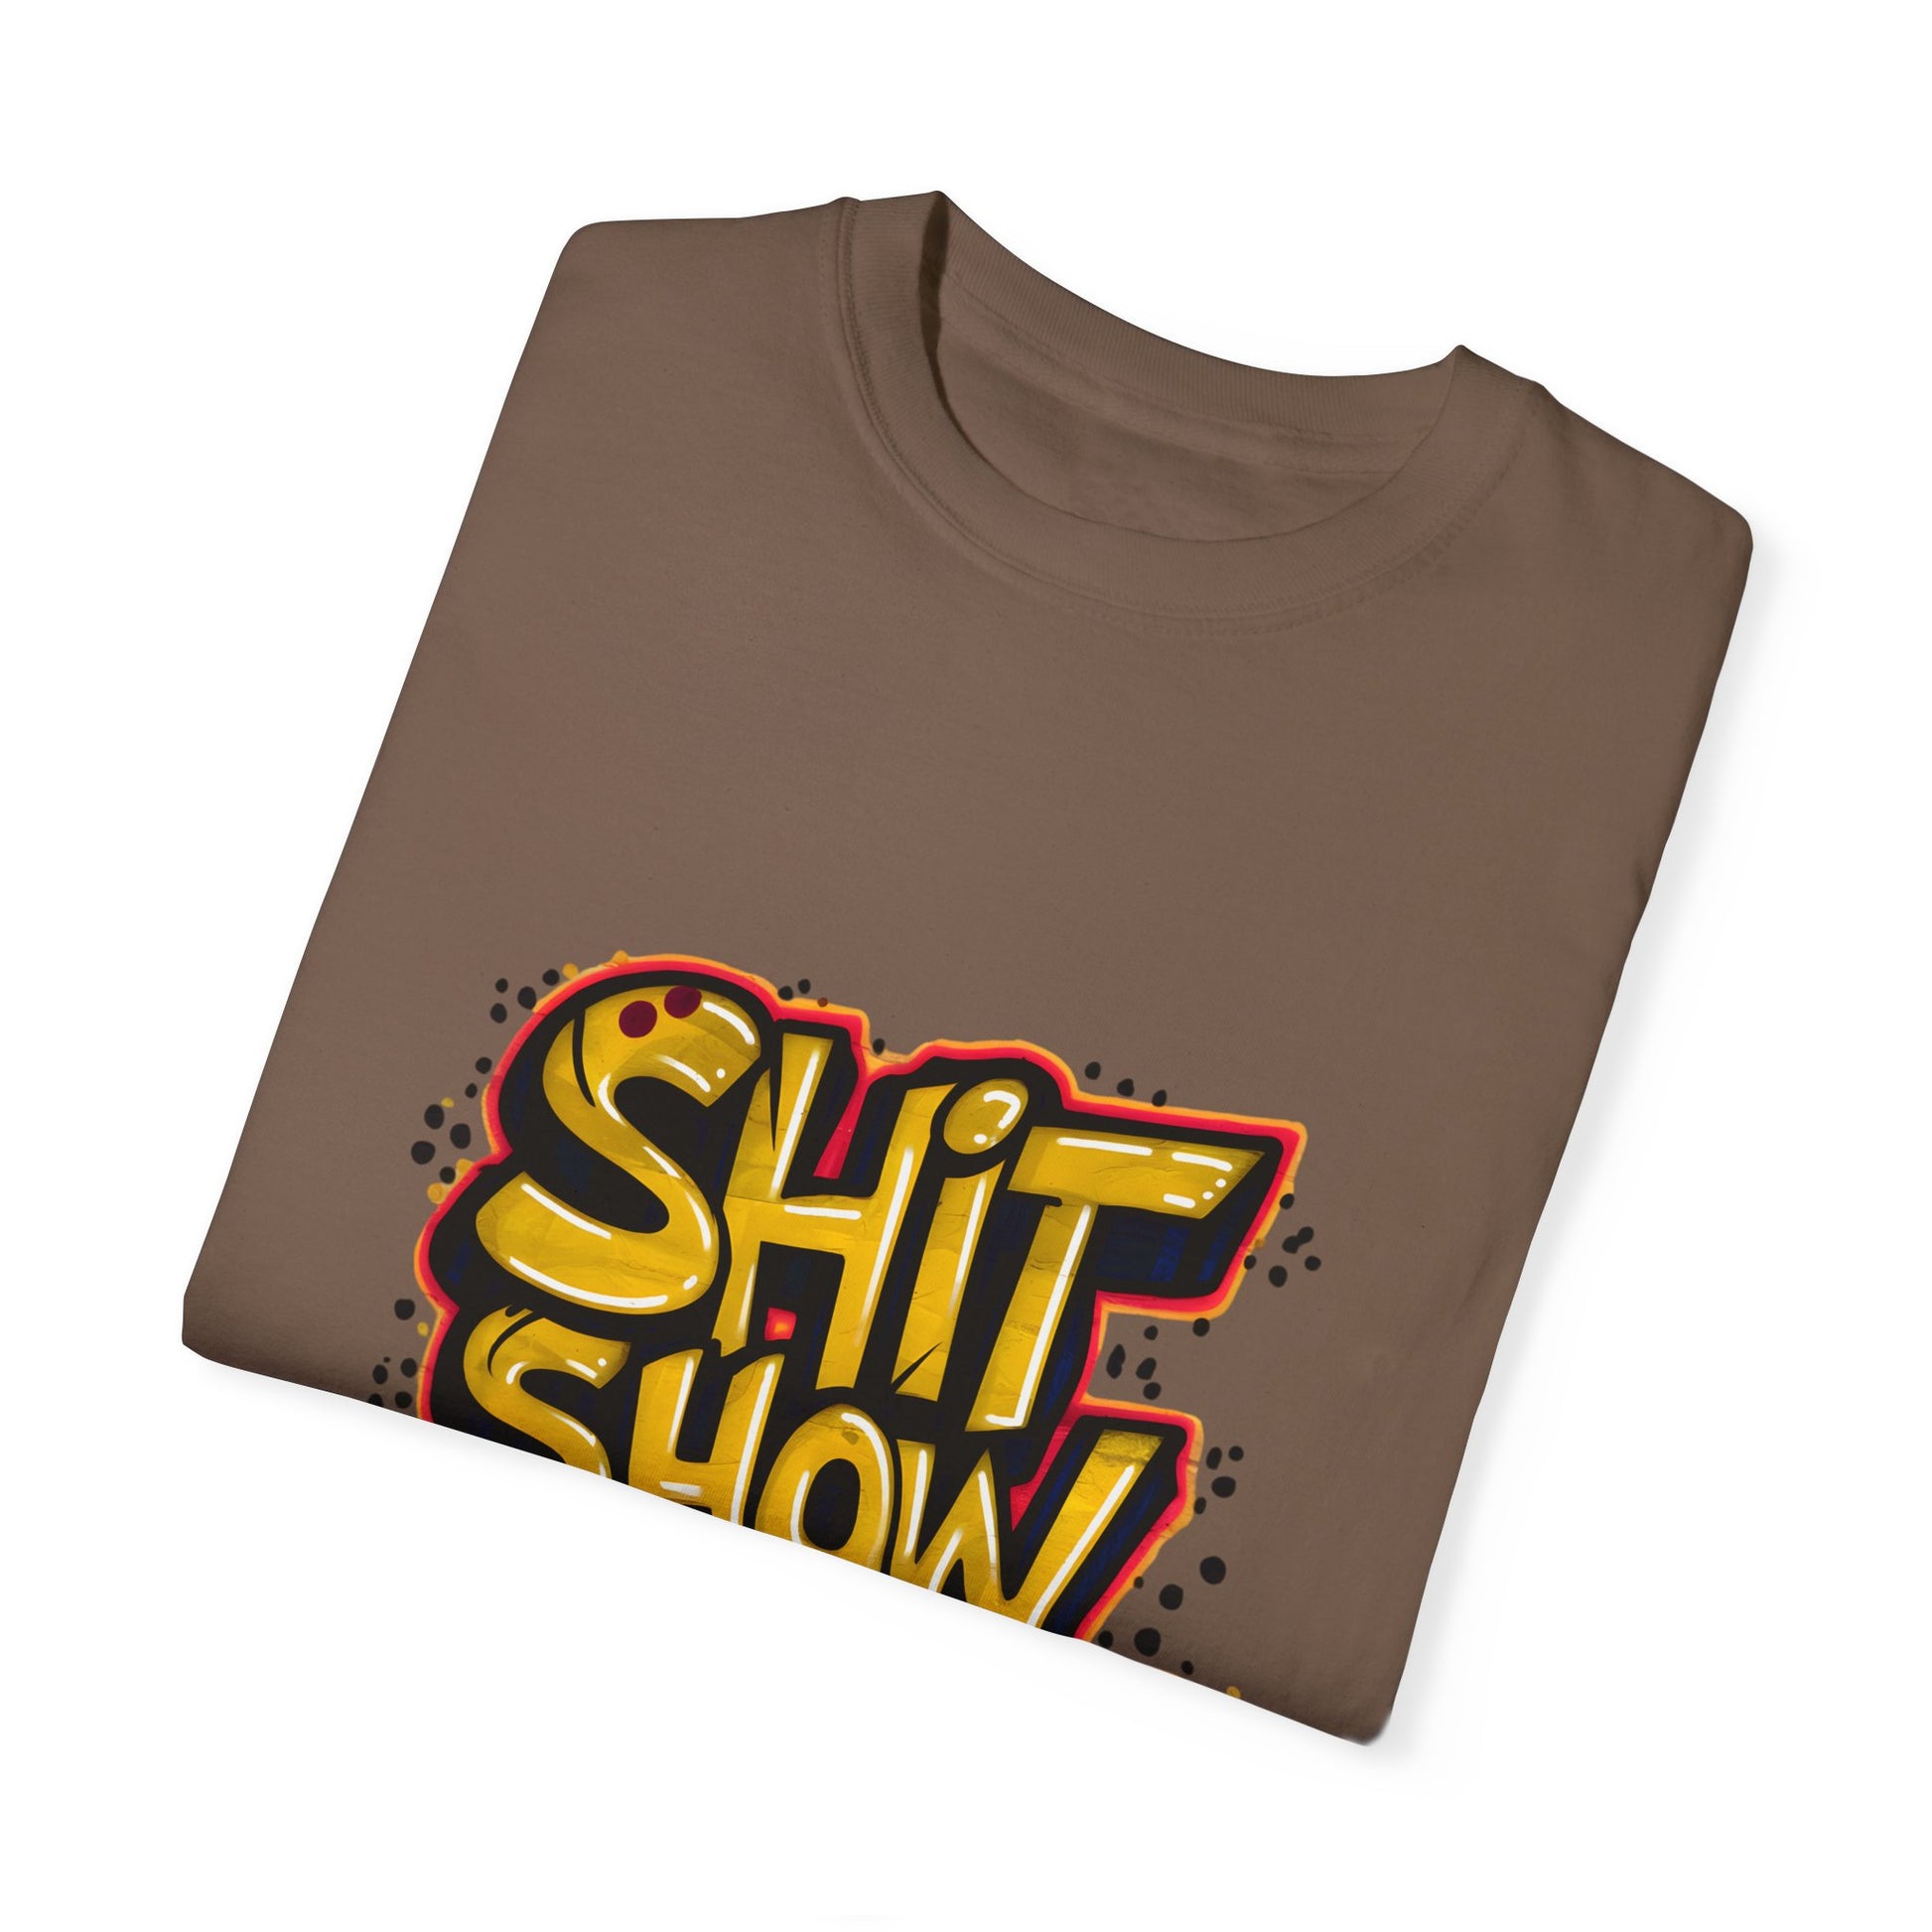 Shit Show Supervisor Urban Sarcastic Graphic Unisex Garment Dyed T-shirt Cotton Funny Humorous Graphic Soft Premium Unisex Men Women Espresso T-shirt Birthday Gift-59